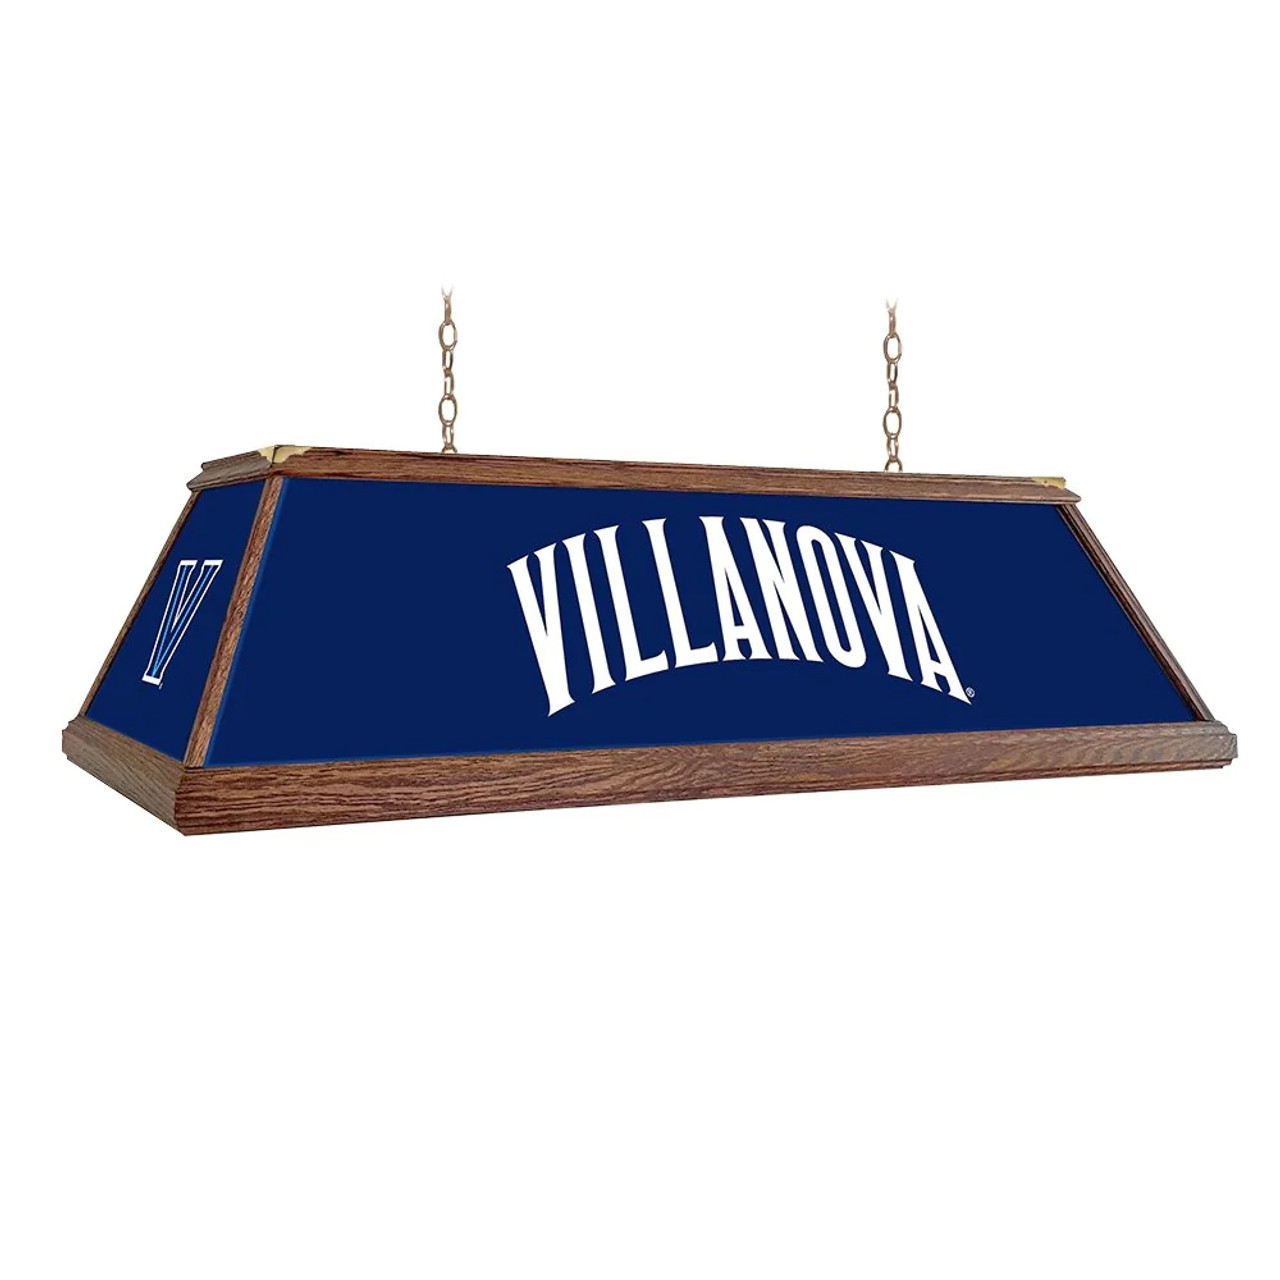 Villanova, Wildcats, Premium, Wood, Billiard, Pool, Table, Light, Lamp, NCNOVA-330-01A, NCNOVA-330-01B, The Fan-Brand, 688099400941